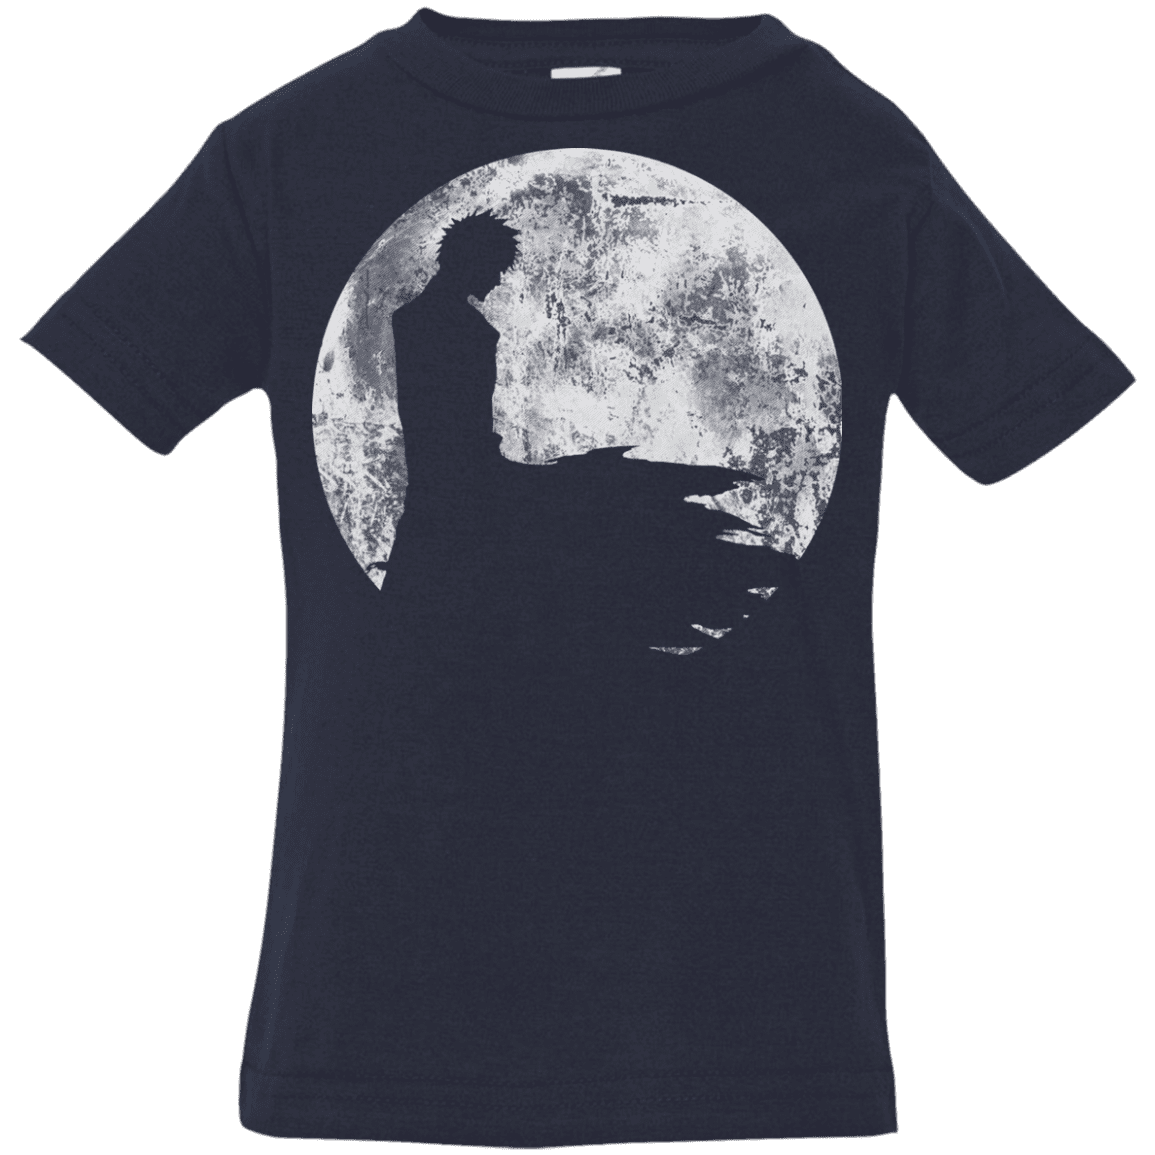 T-Shirts Navy / 6 Months Shinigami Moon Infant Premium T-Shirt